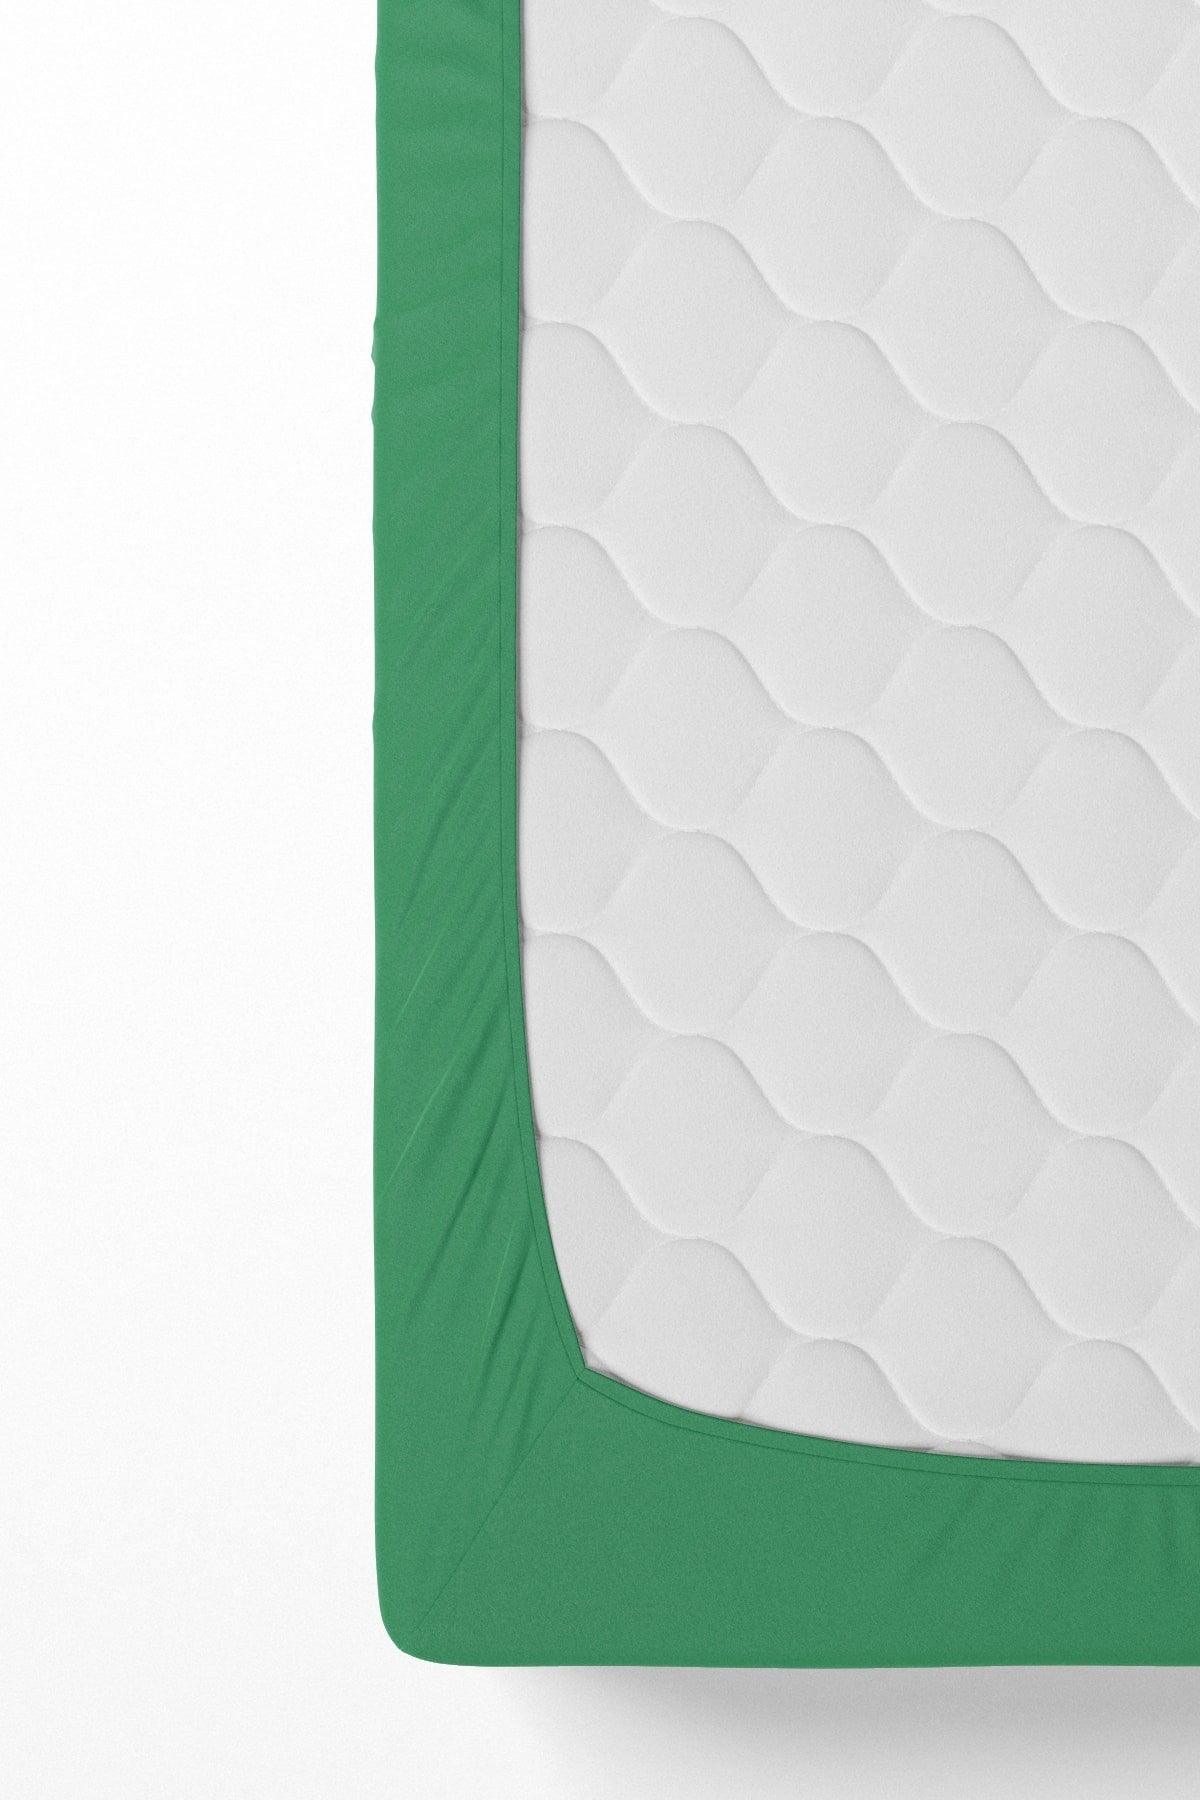 Single Cotton Elastic Bed Sheet - Green - Swordslife